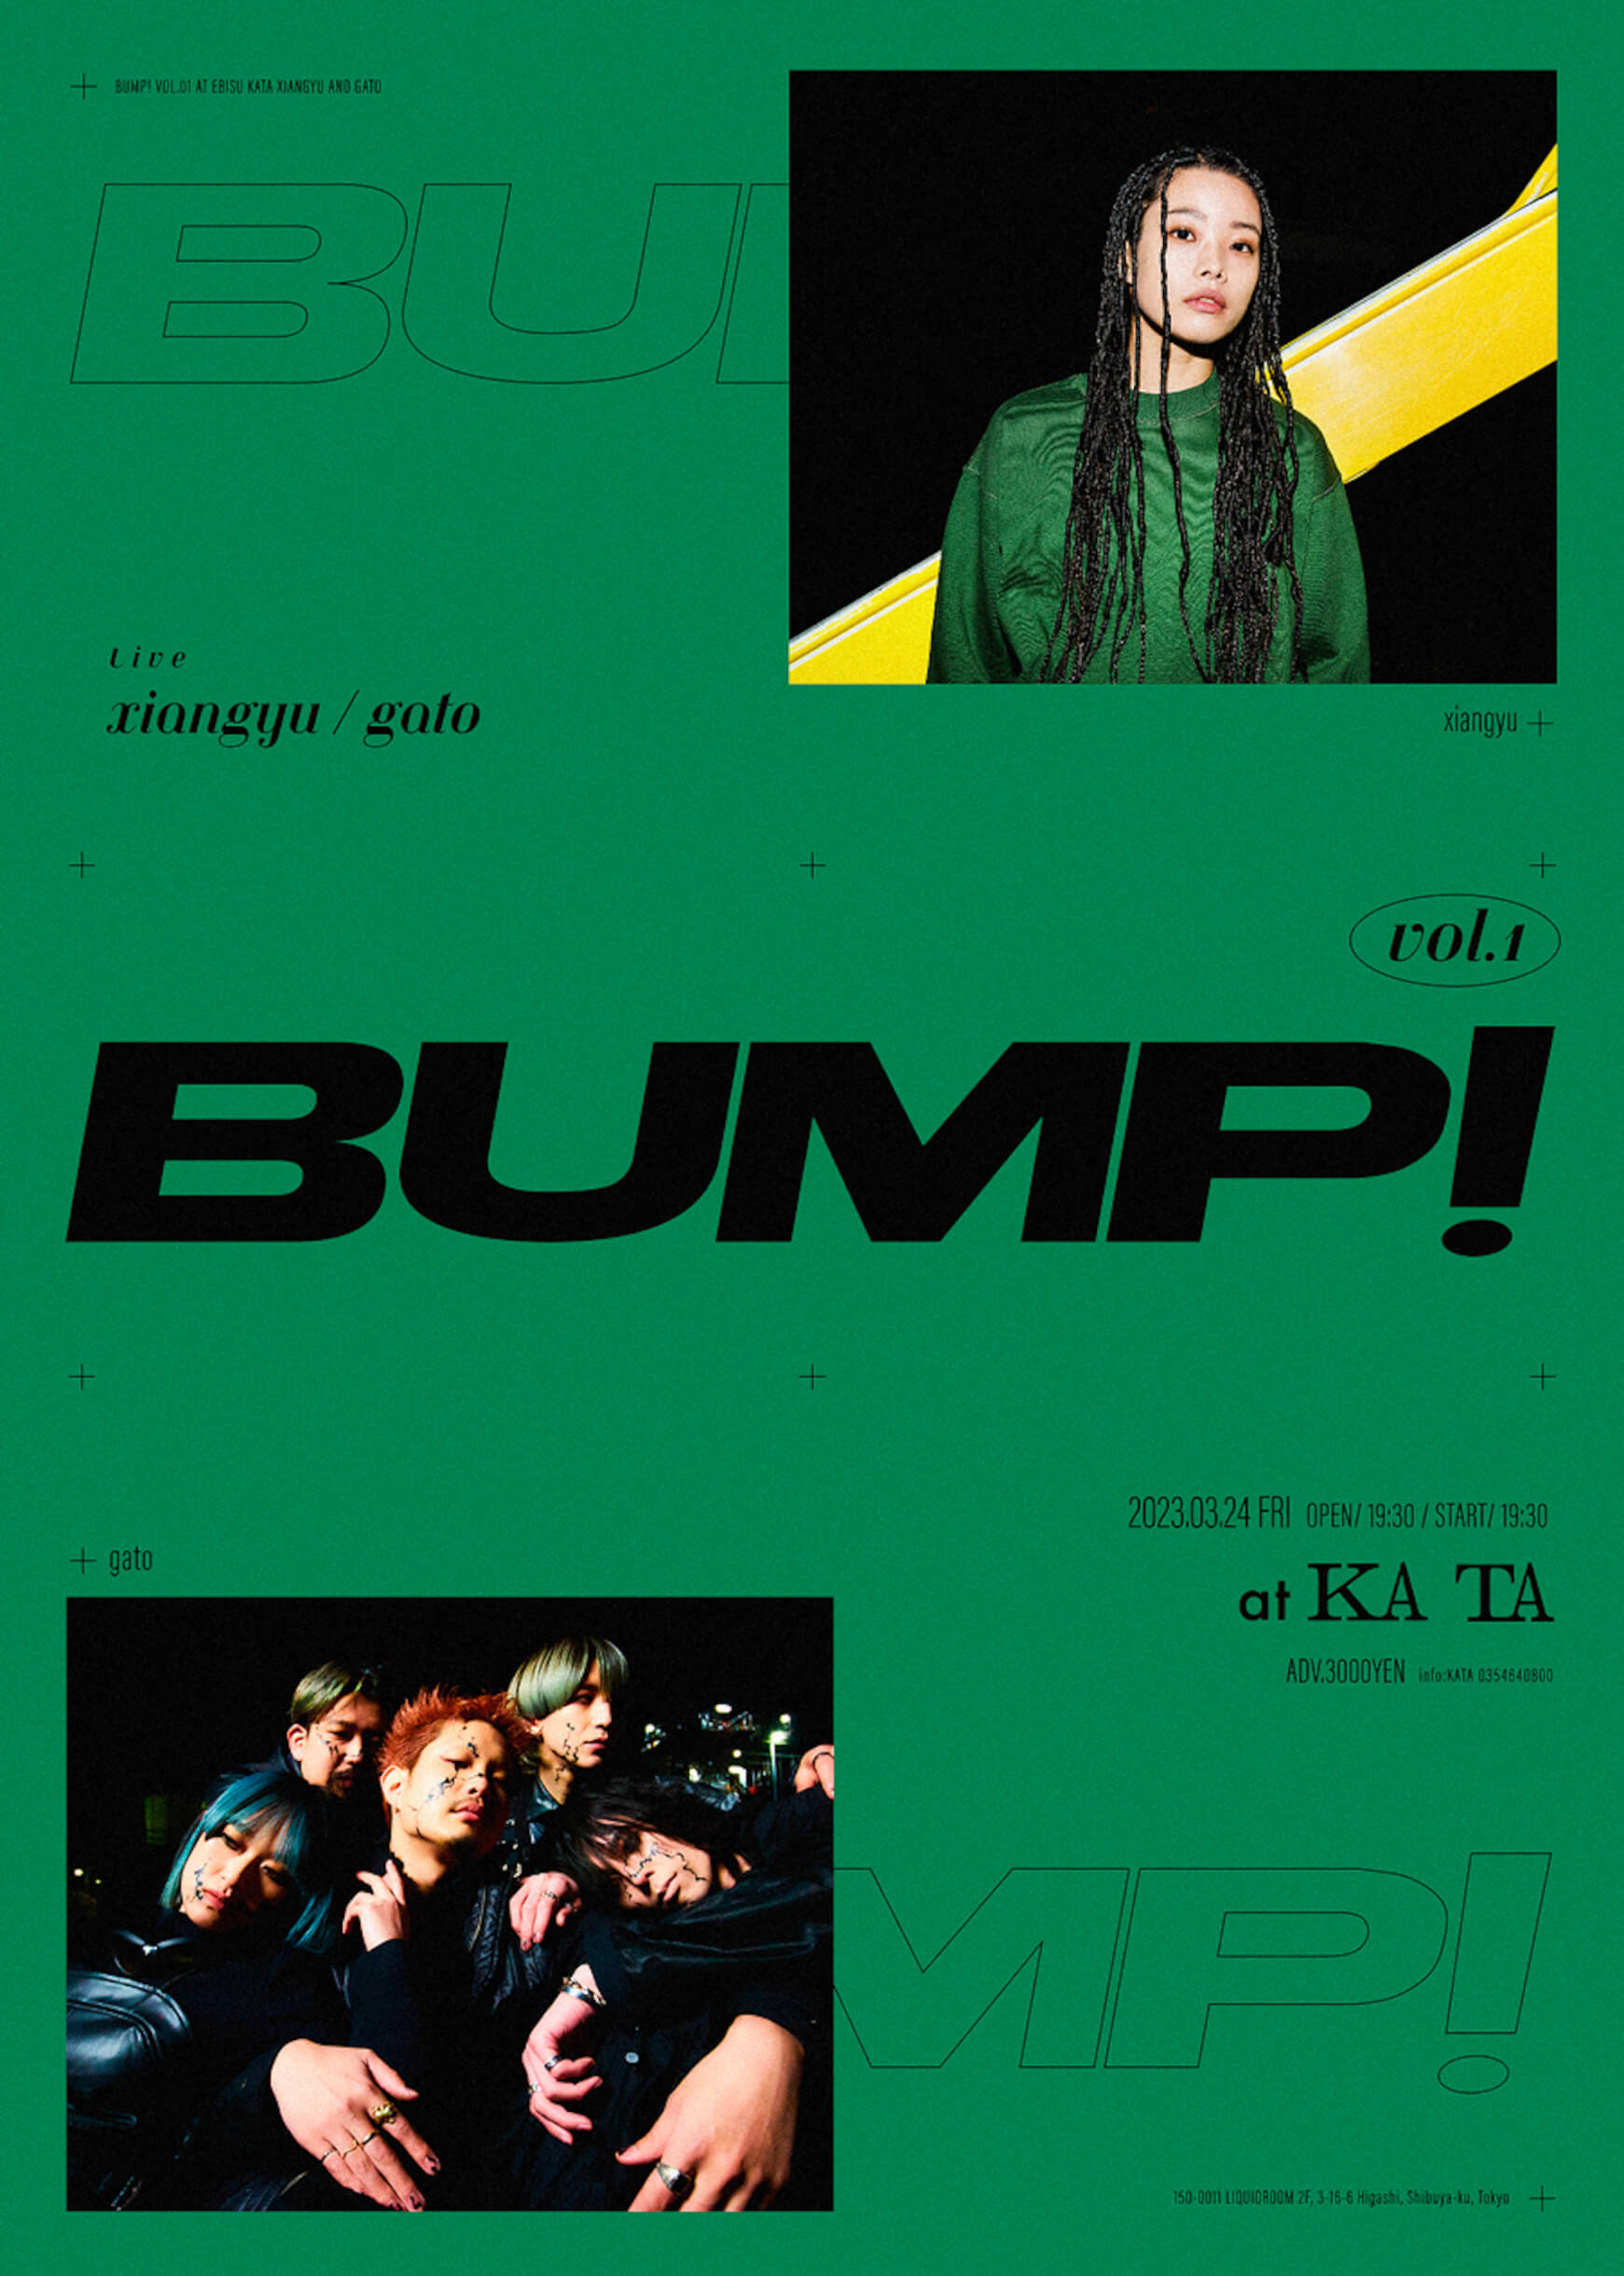 xiangyu主催ツーマン企画＜bump!＞が恵比寿KATAで開催決定｜Vol.1はgatoが出演 music230206-xiangyu-gato-01